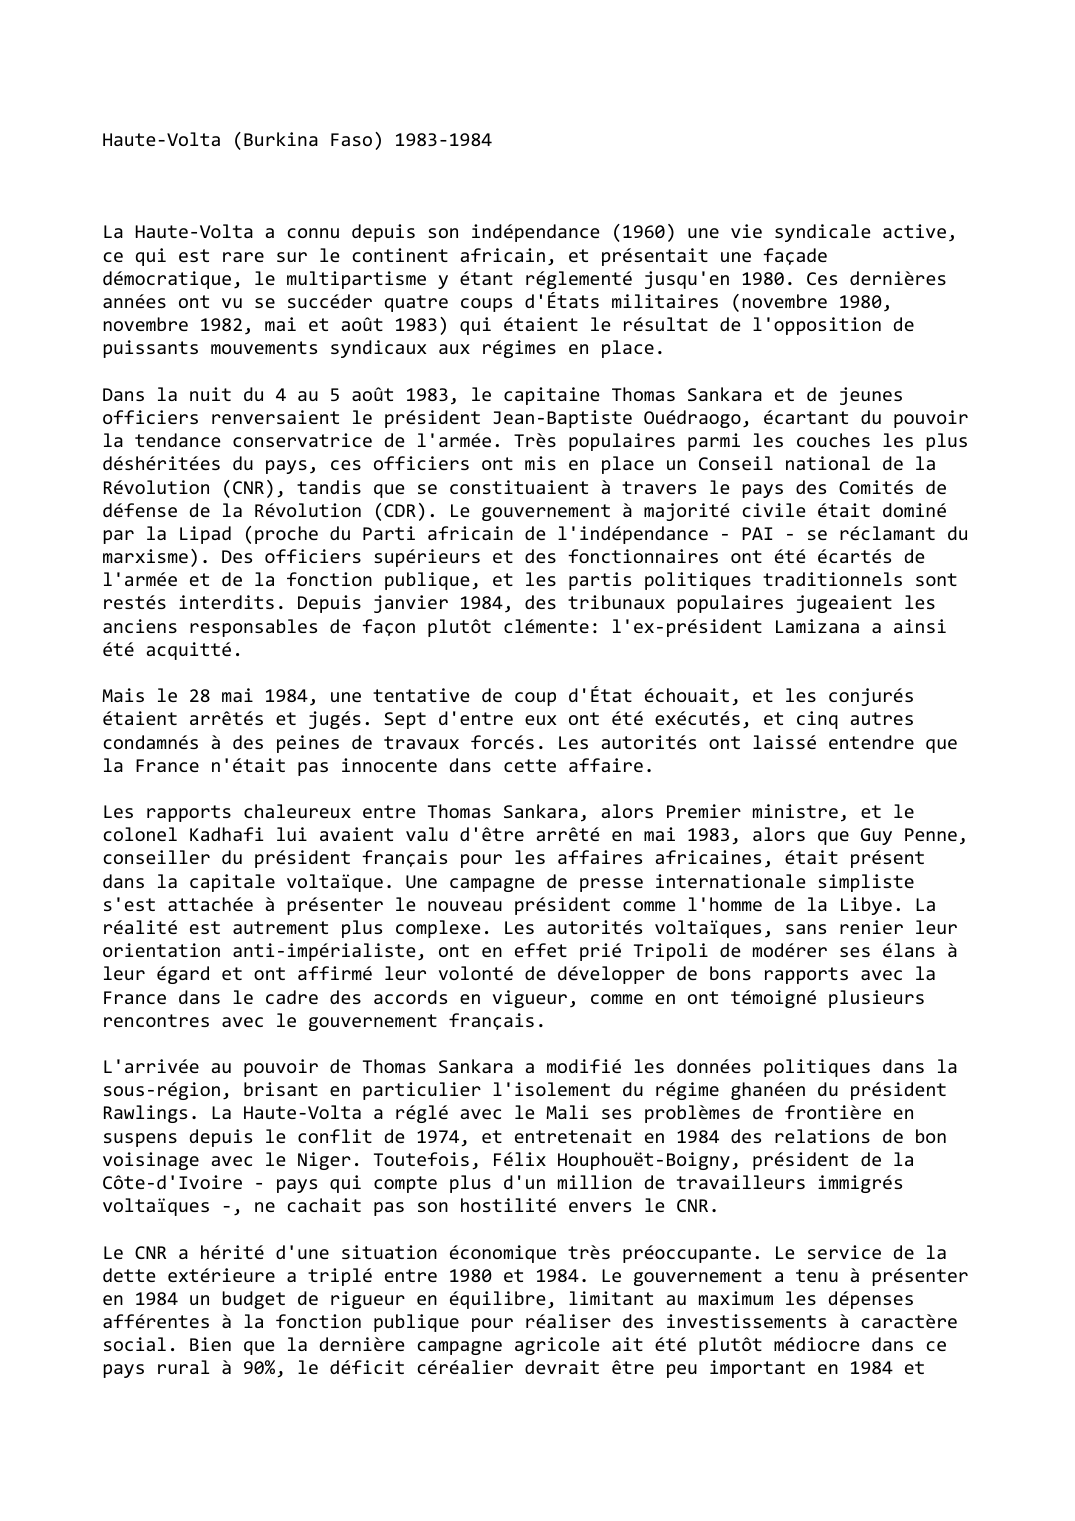 Prévisualisation du document Haute-Volta (Burkina Faso): 1983-1984